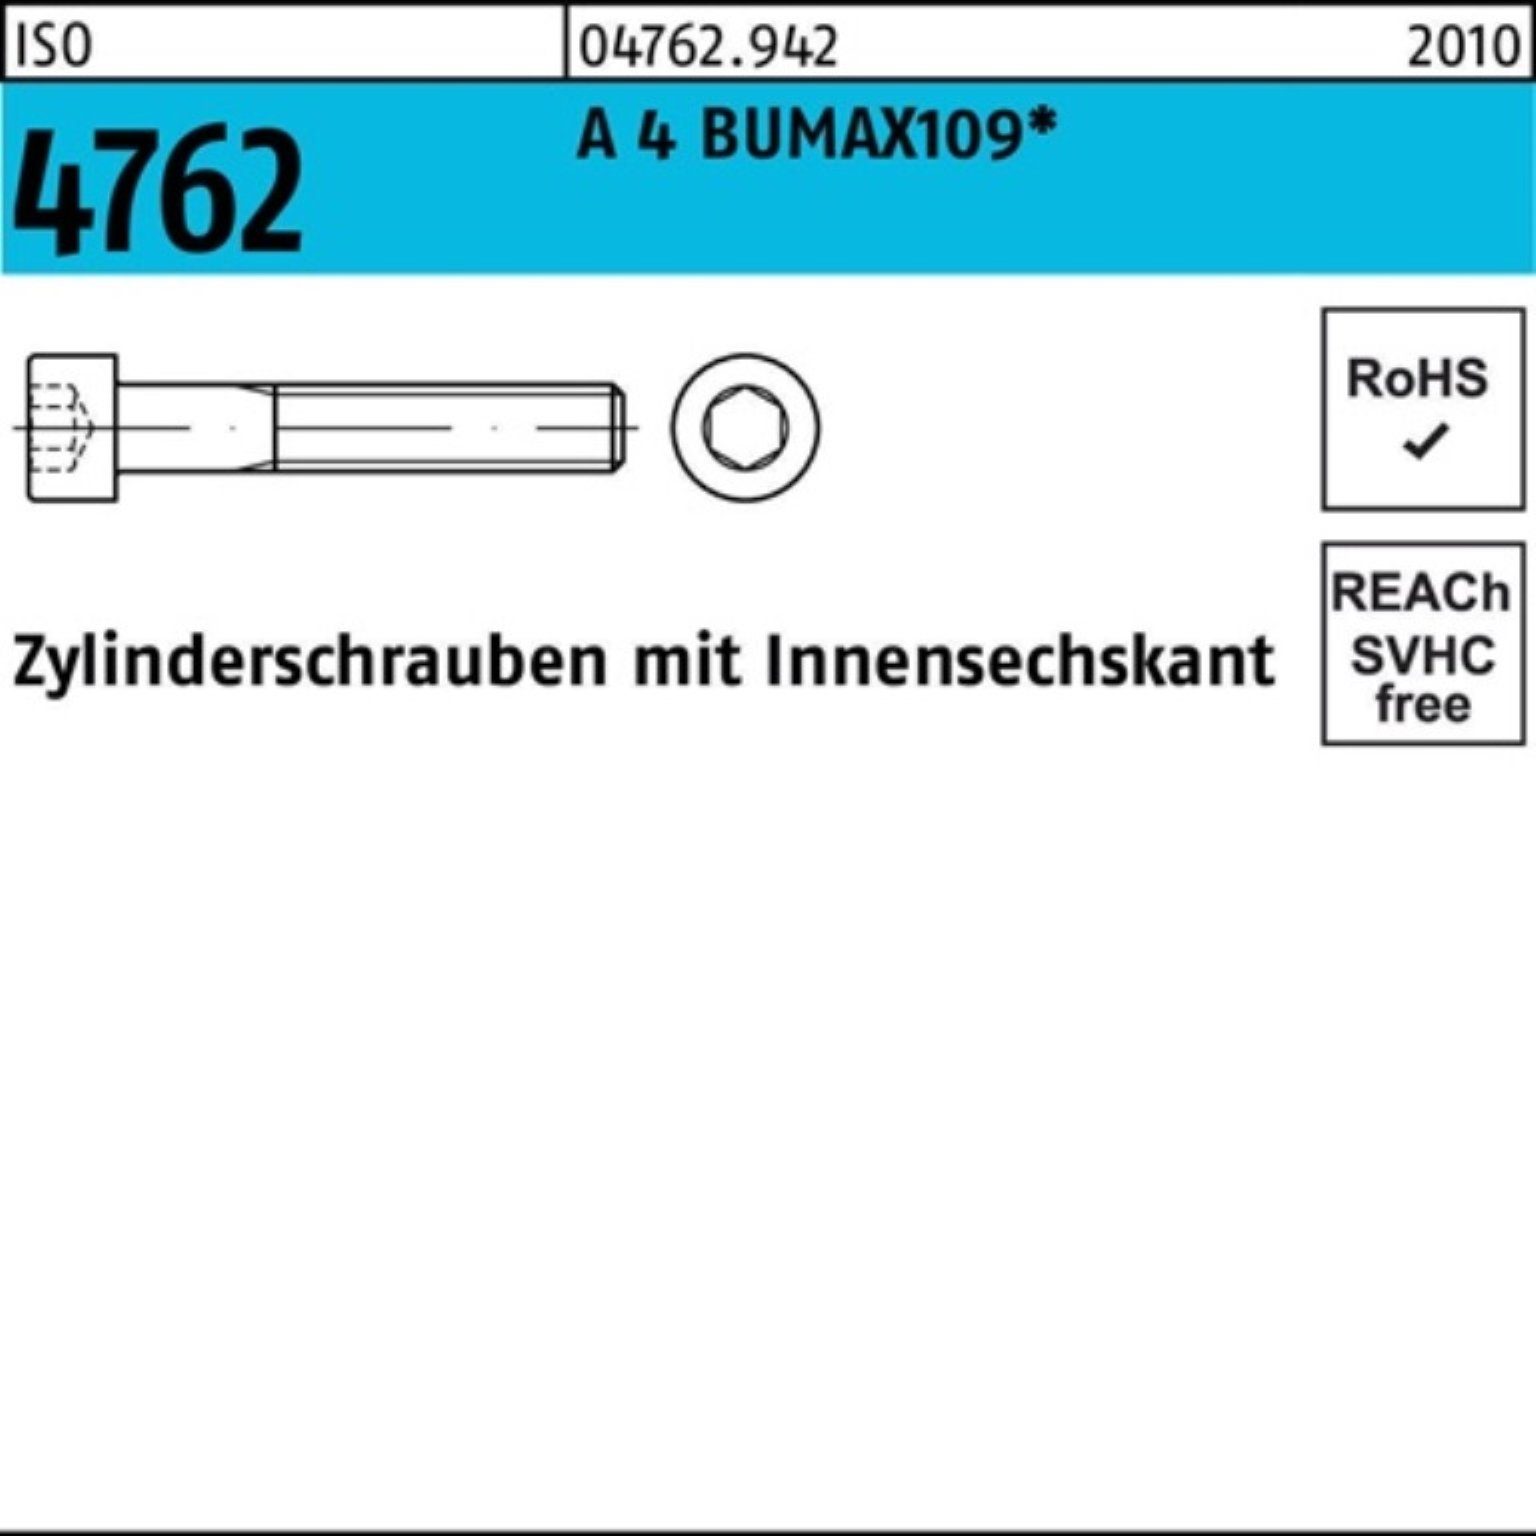 Bufab Zylinderschraube 100er Pack Zylinderschraube ISO 4762 Innen-6kt M10x 20 A 4 BUMAX109 50